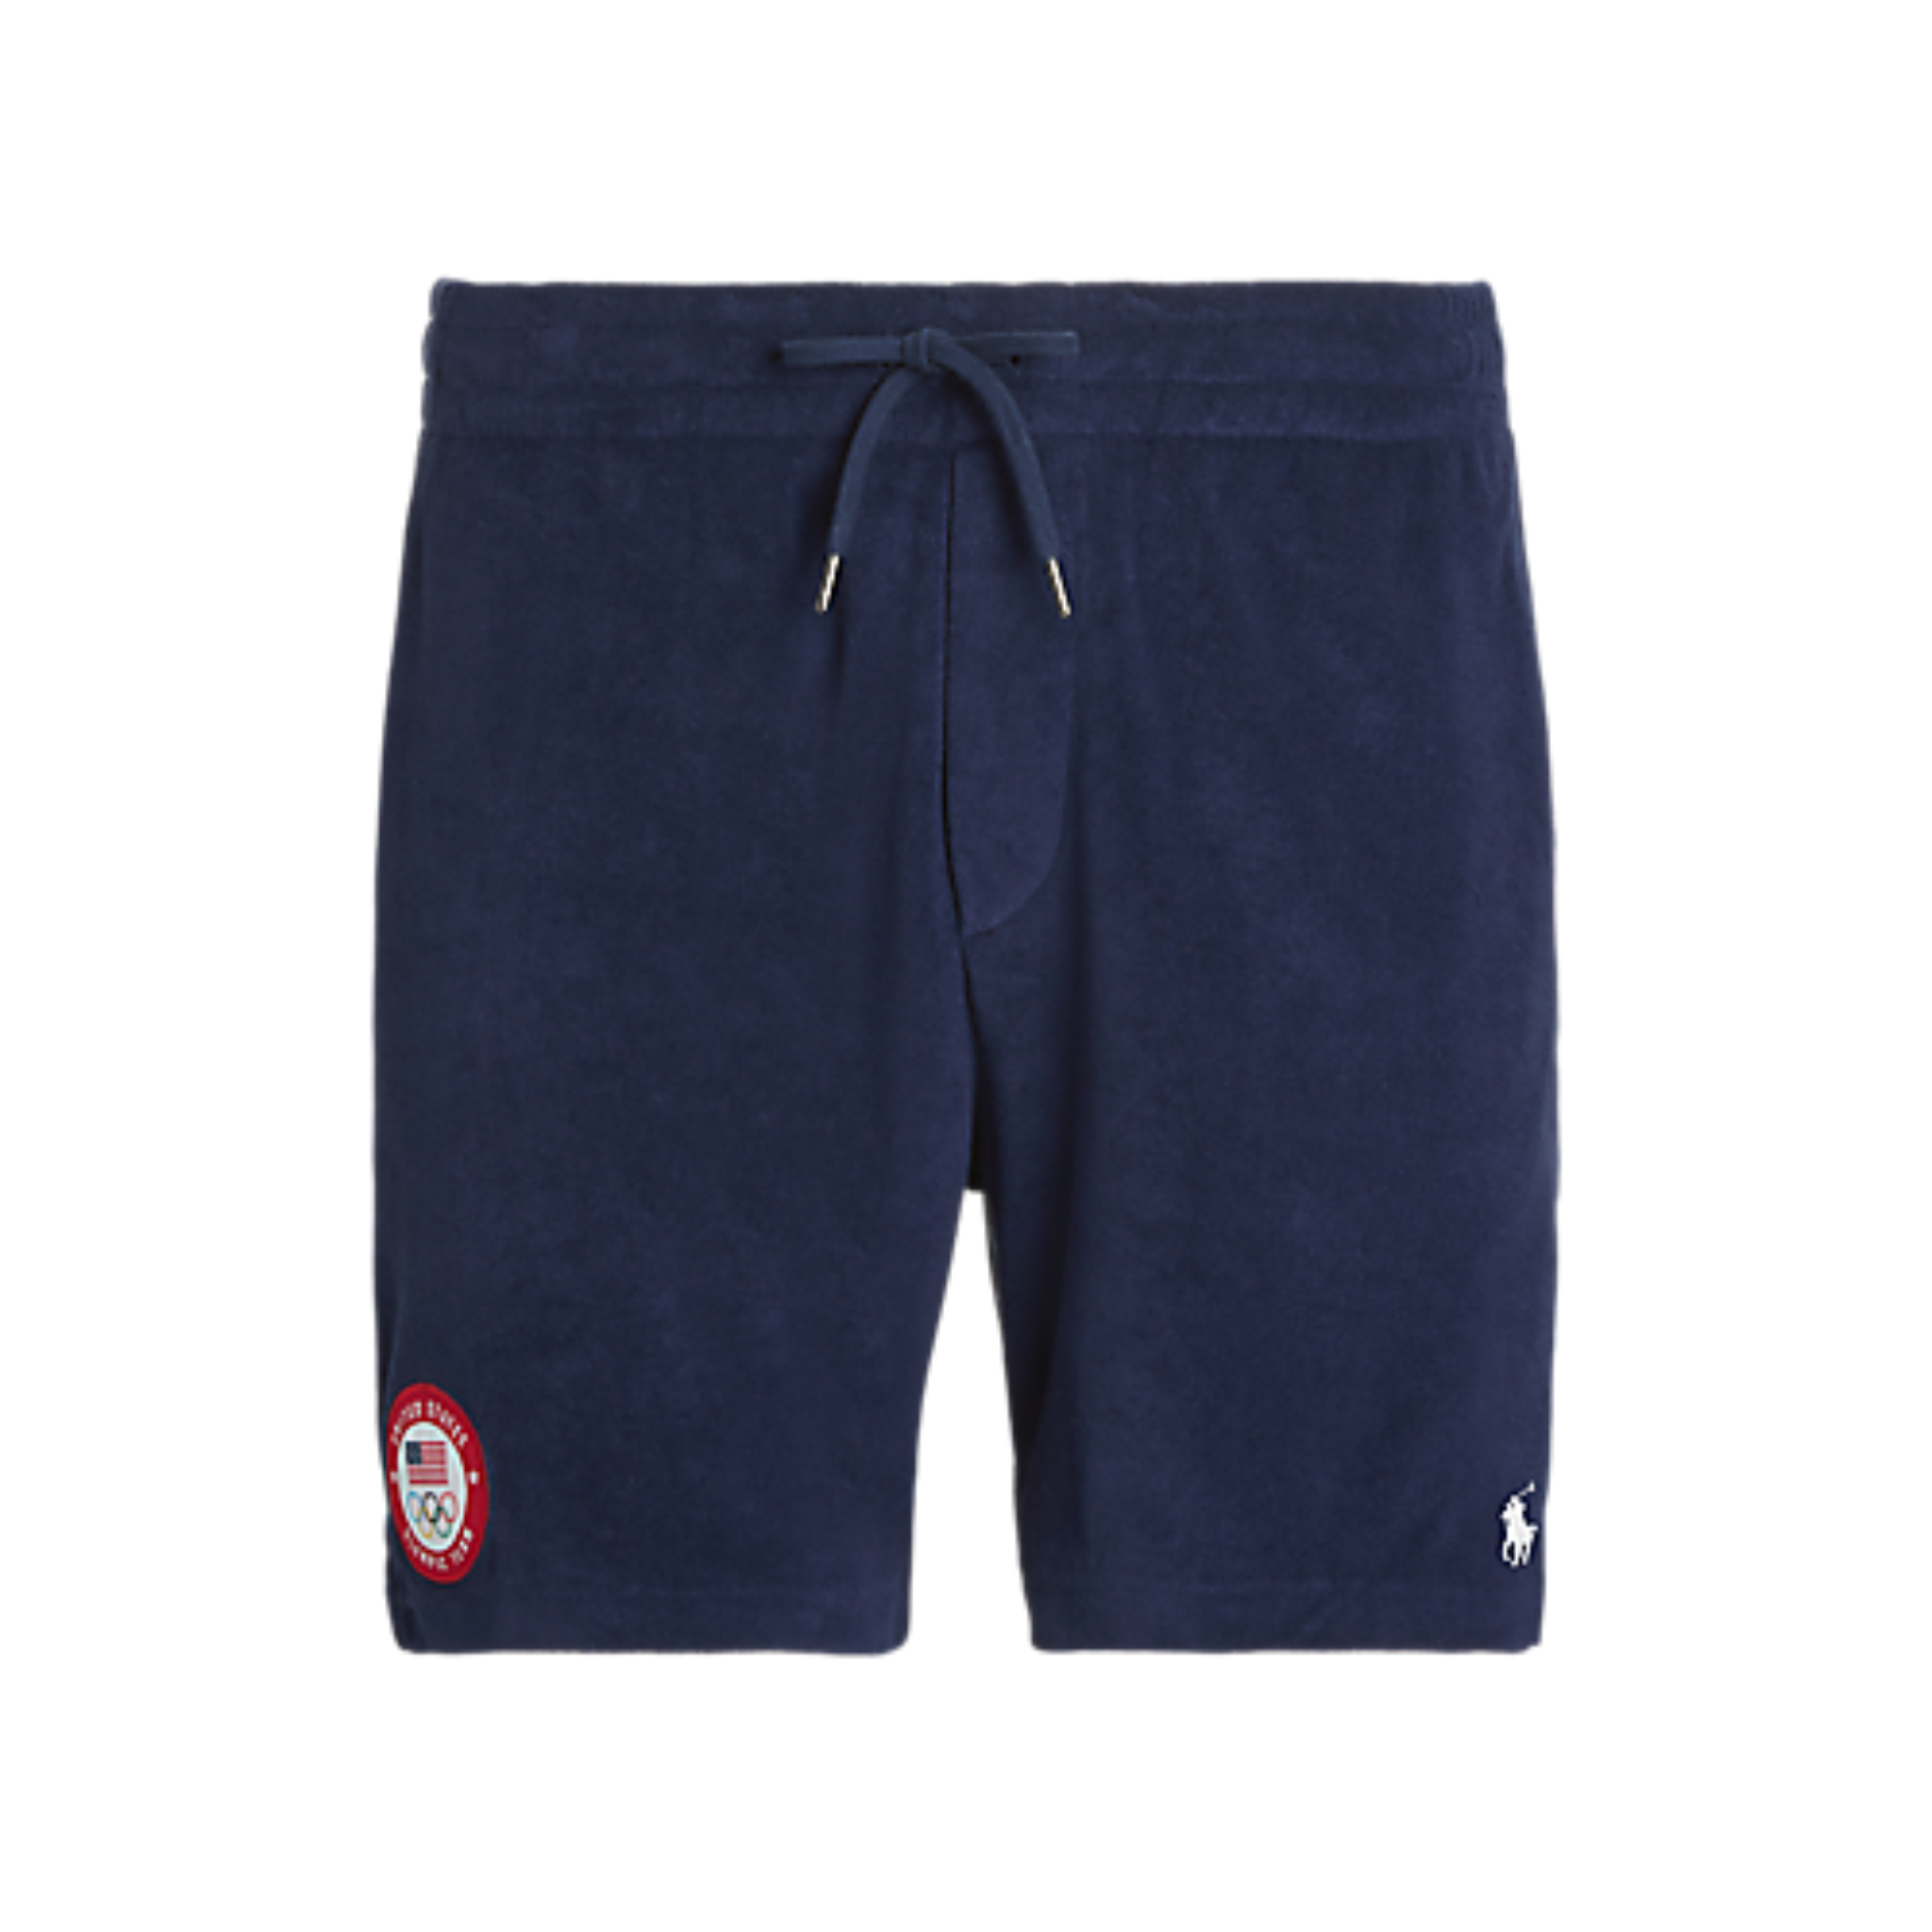 Polo Ralph Lauren Olympic Shorts (Navy) - Polo Ralph Lauren